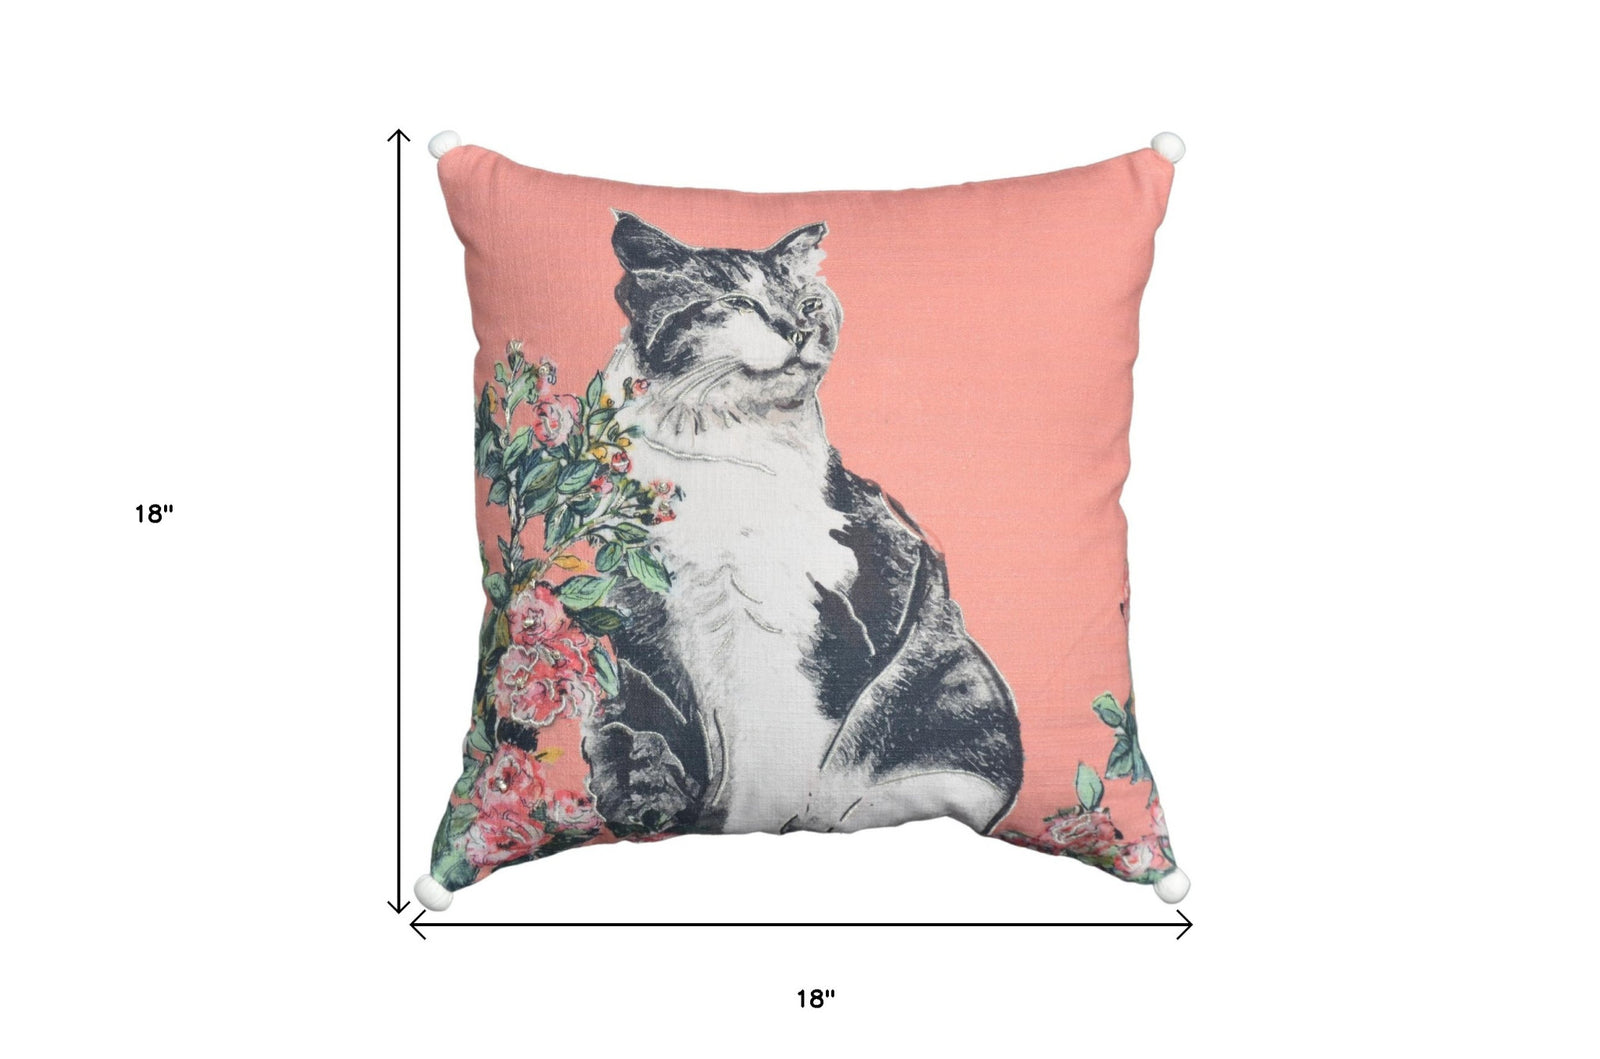 18" X 18" Pink Cat Zippered Handmade Cotton Blend Throw Pillow With Pom Poms